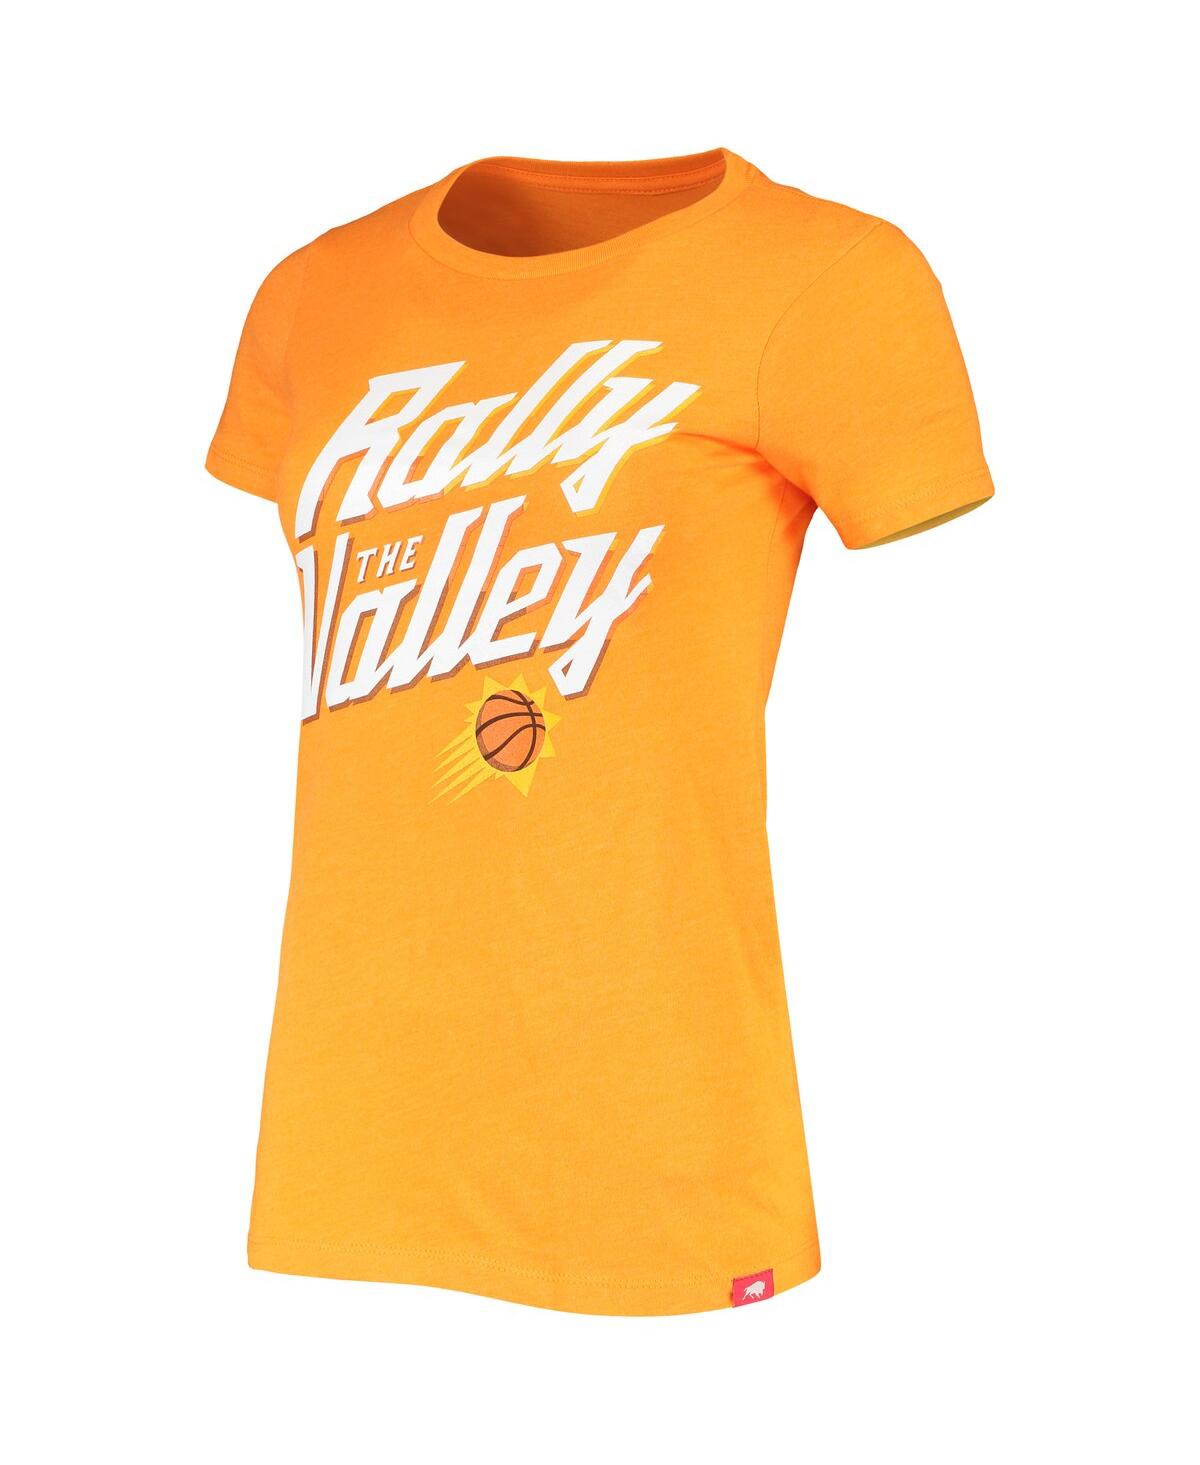 Shop Sportiqe Women's  Heathered Orange Phoenix Suns Rally The Valley Davis T-shirt